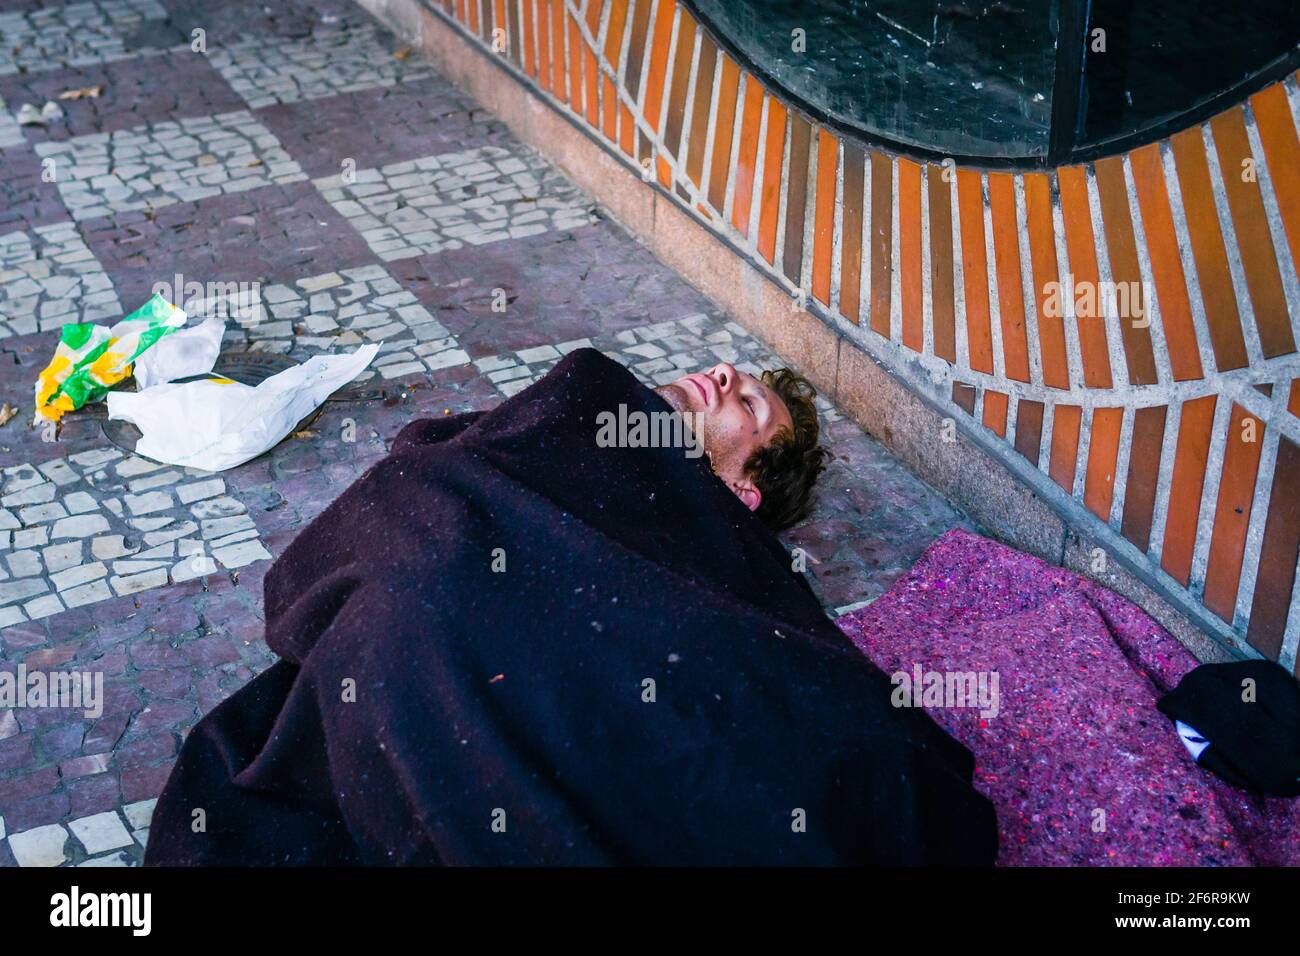 Brazilian young male homeless sleeping on the sidewalk of a street. Stock Photo